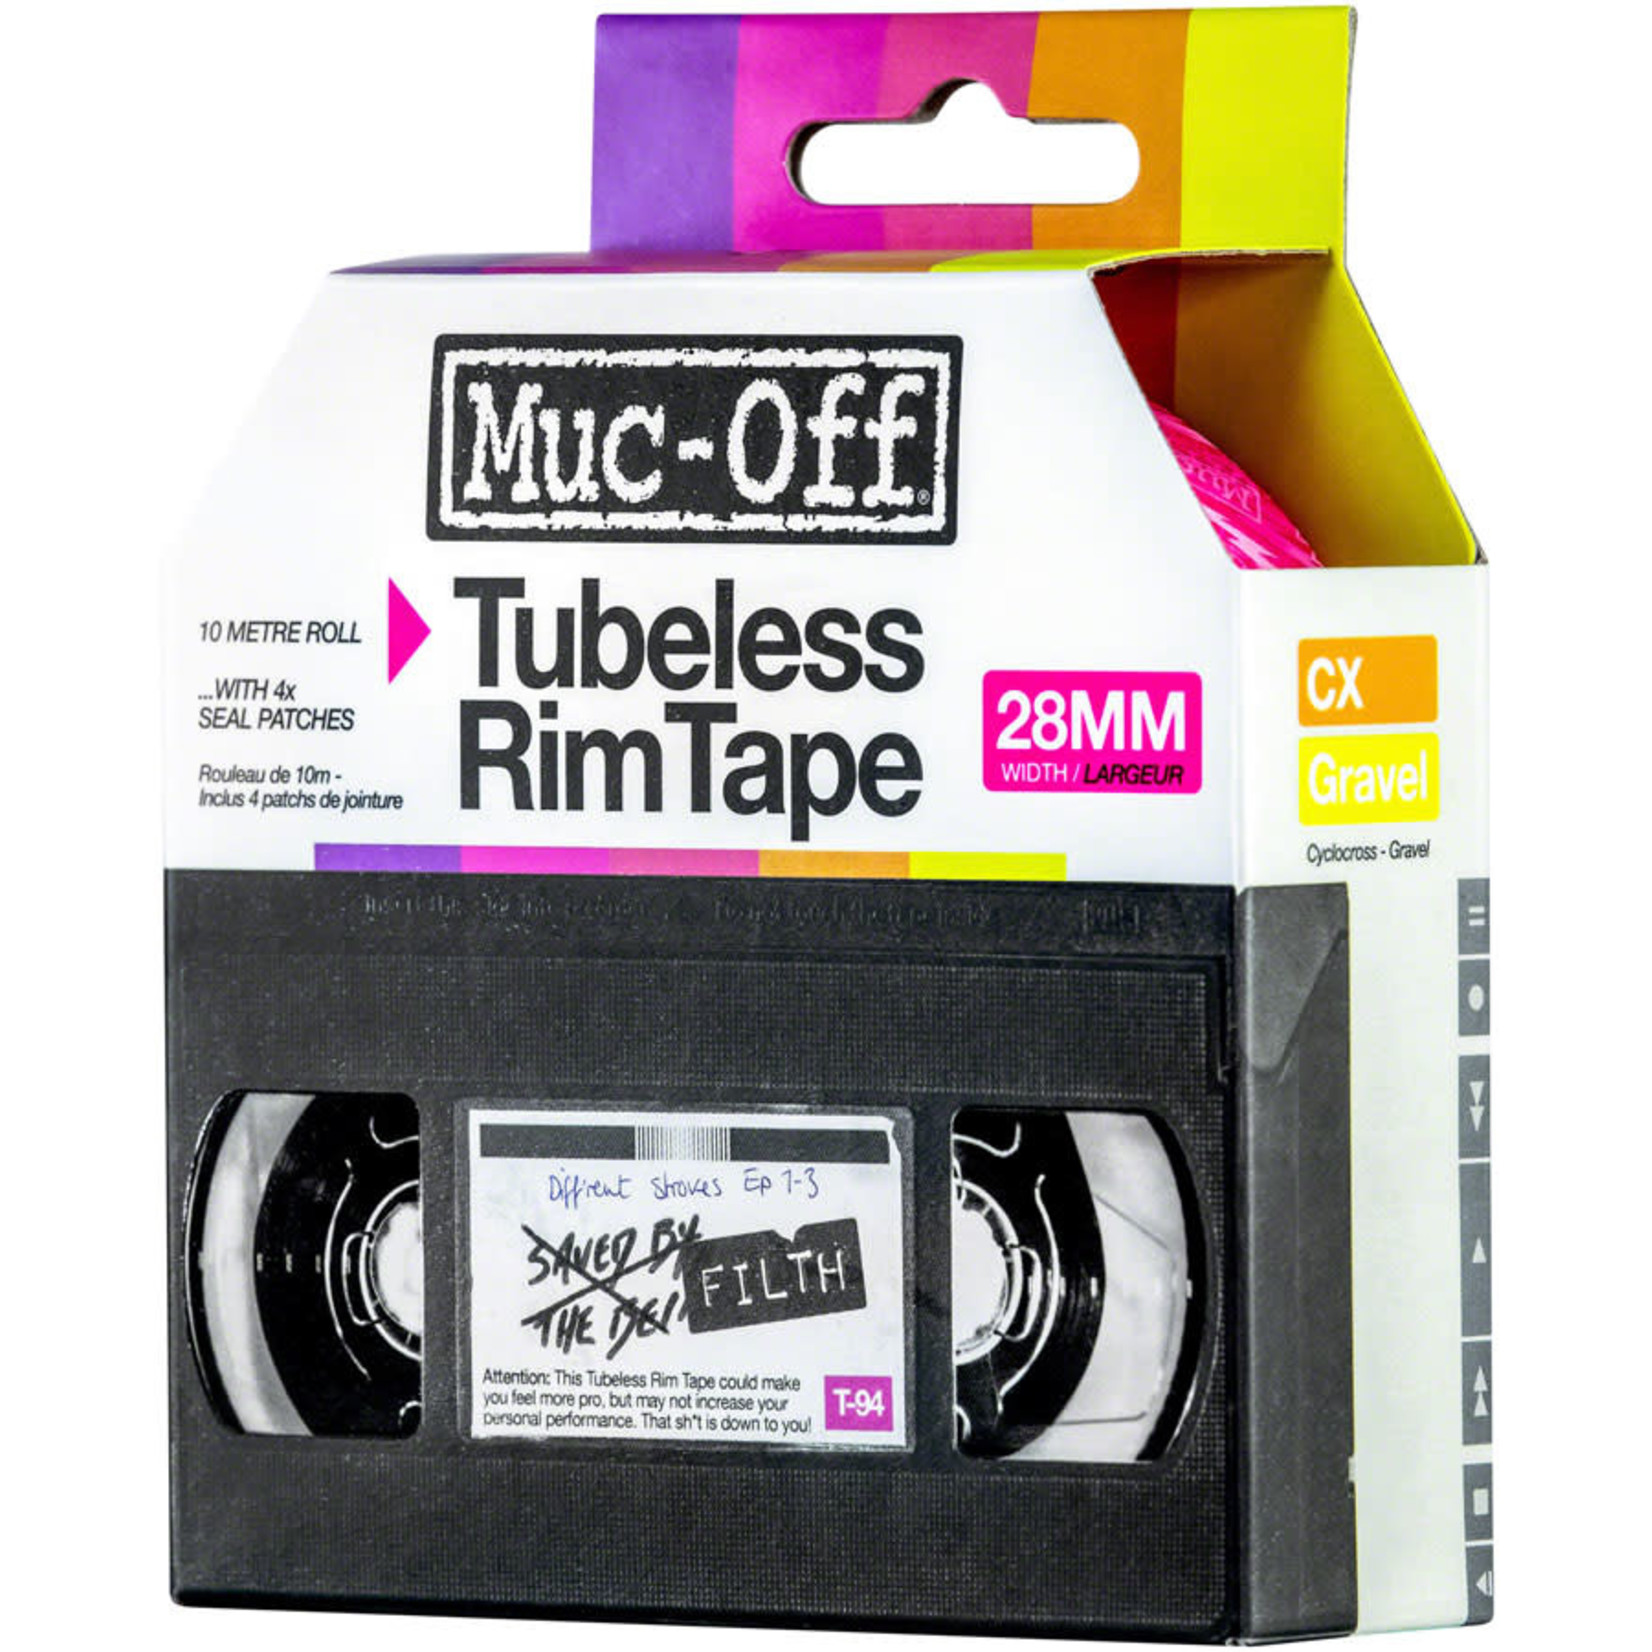 Muc-Off Muc-Off Tubless Rim Tape 28mm (10M Roll)